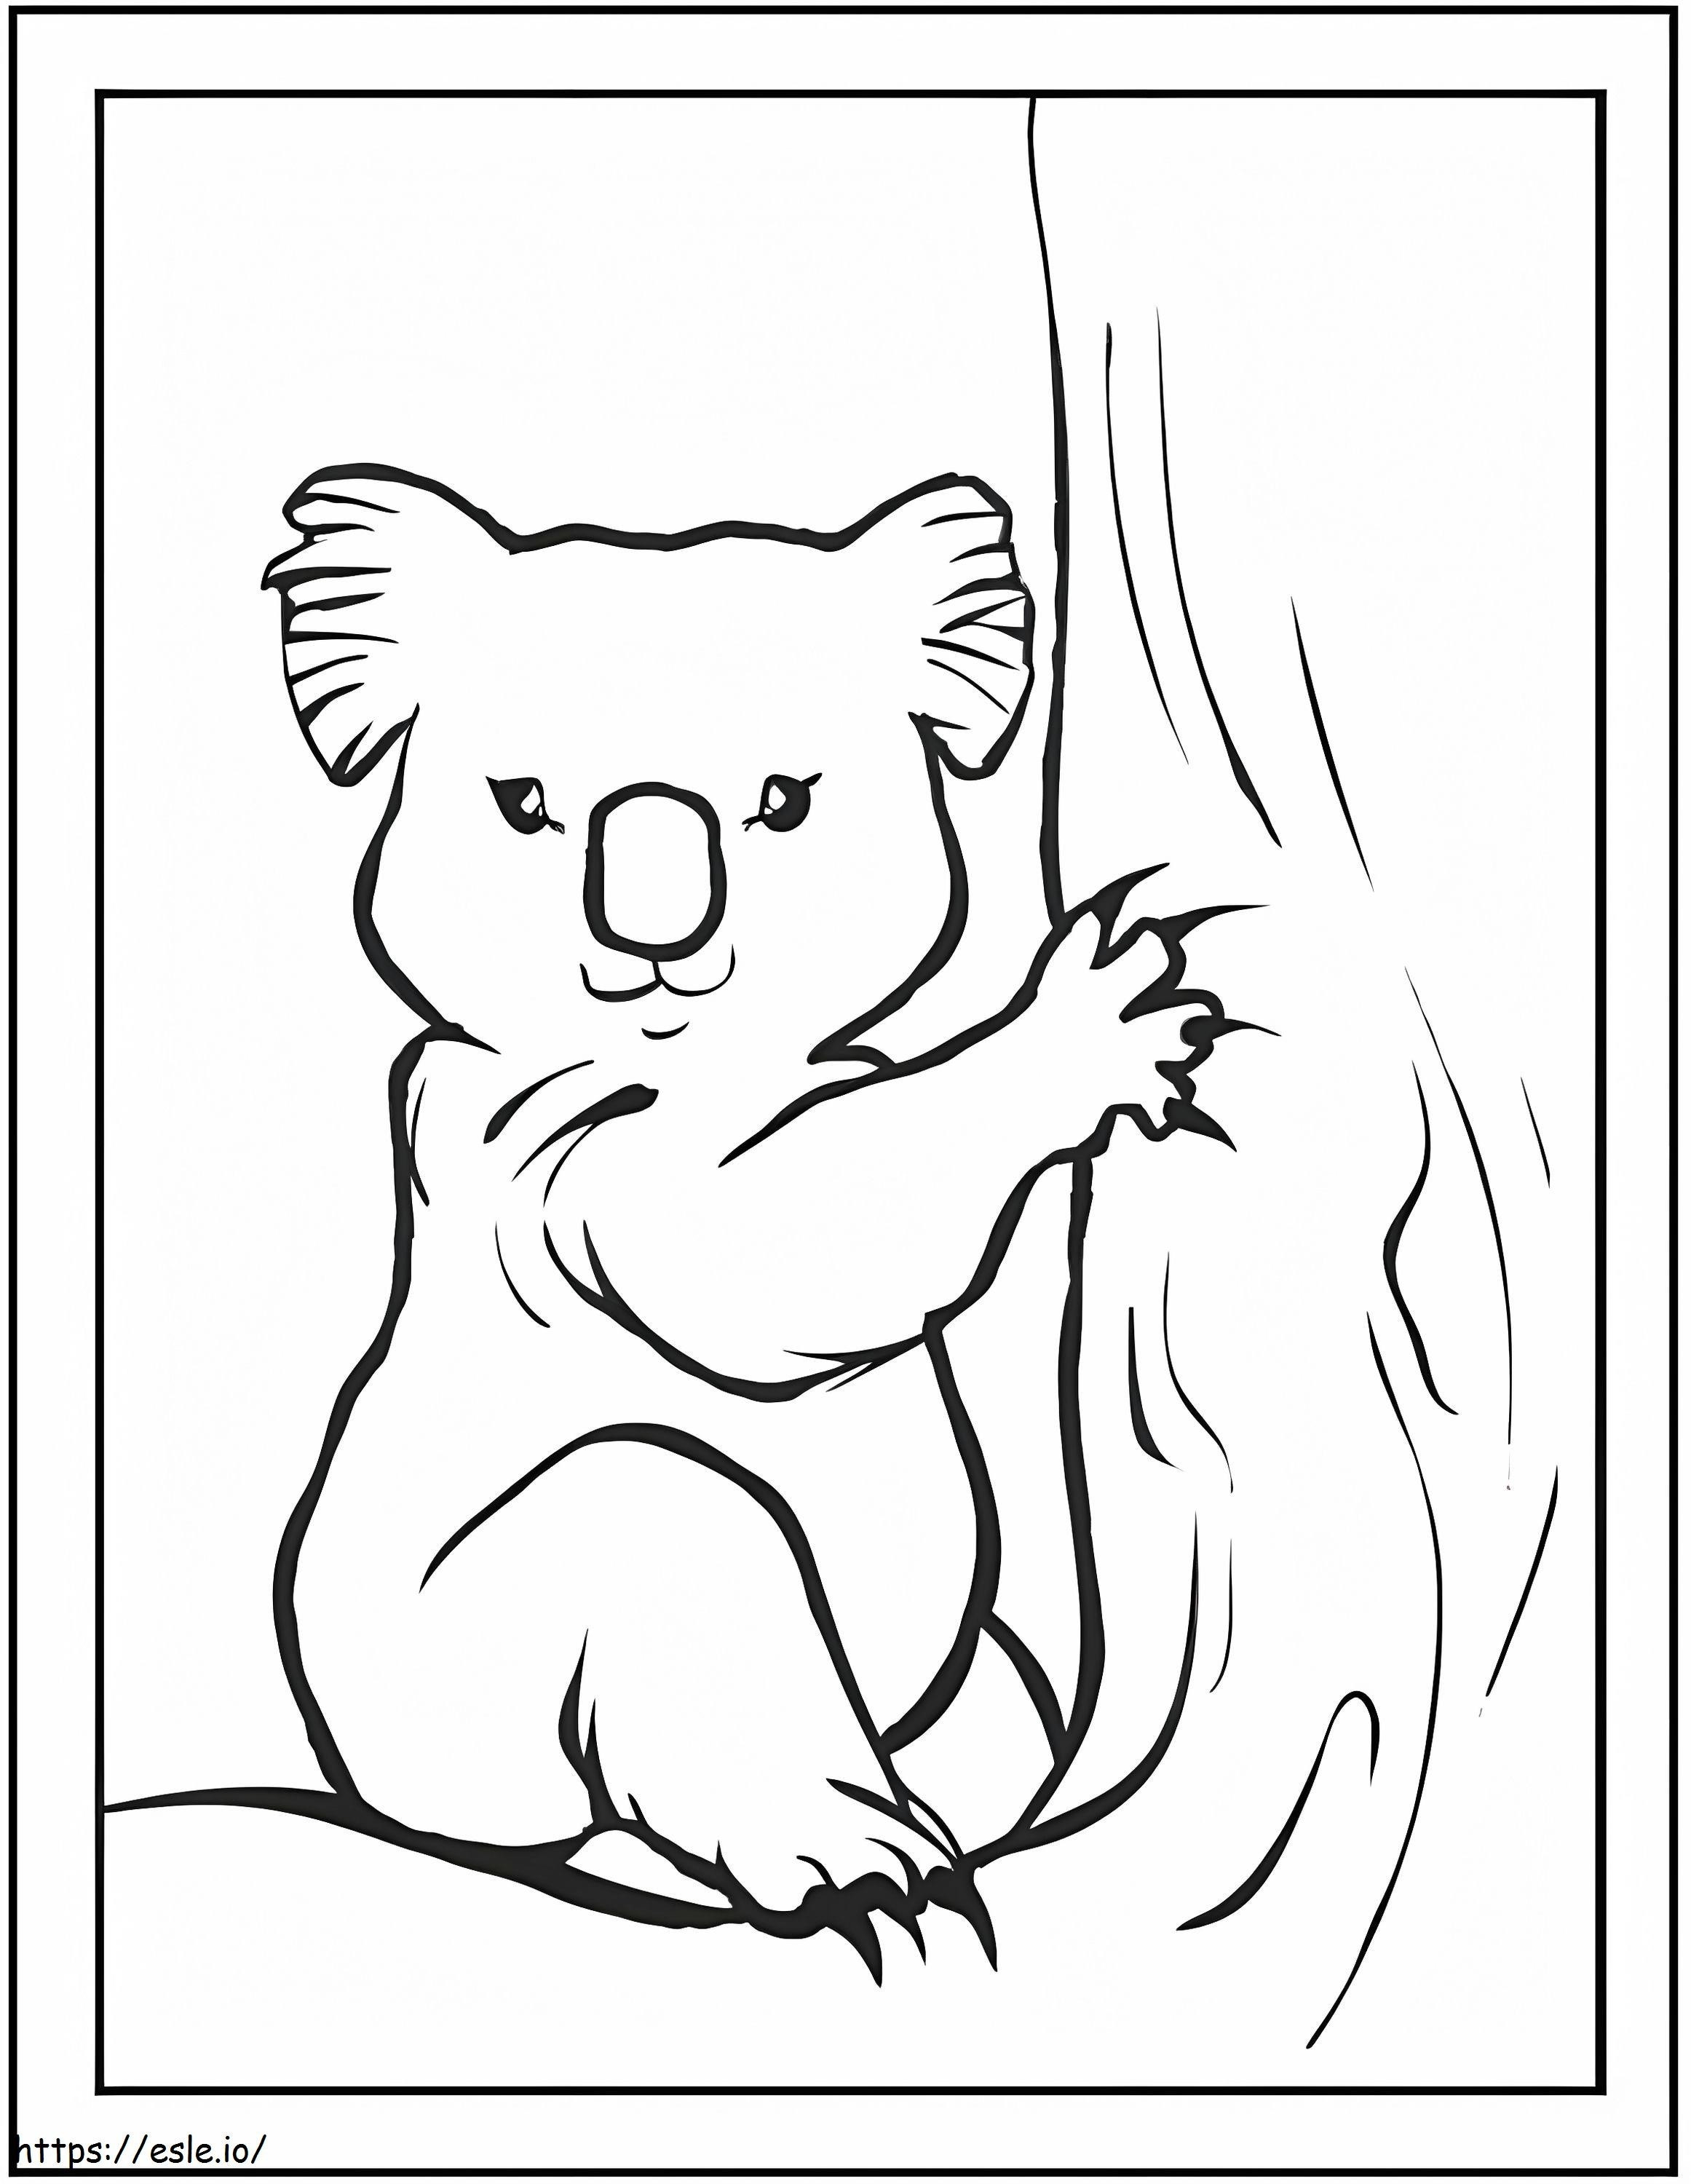 Big Koala coloring page